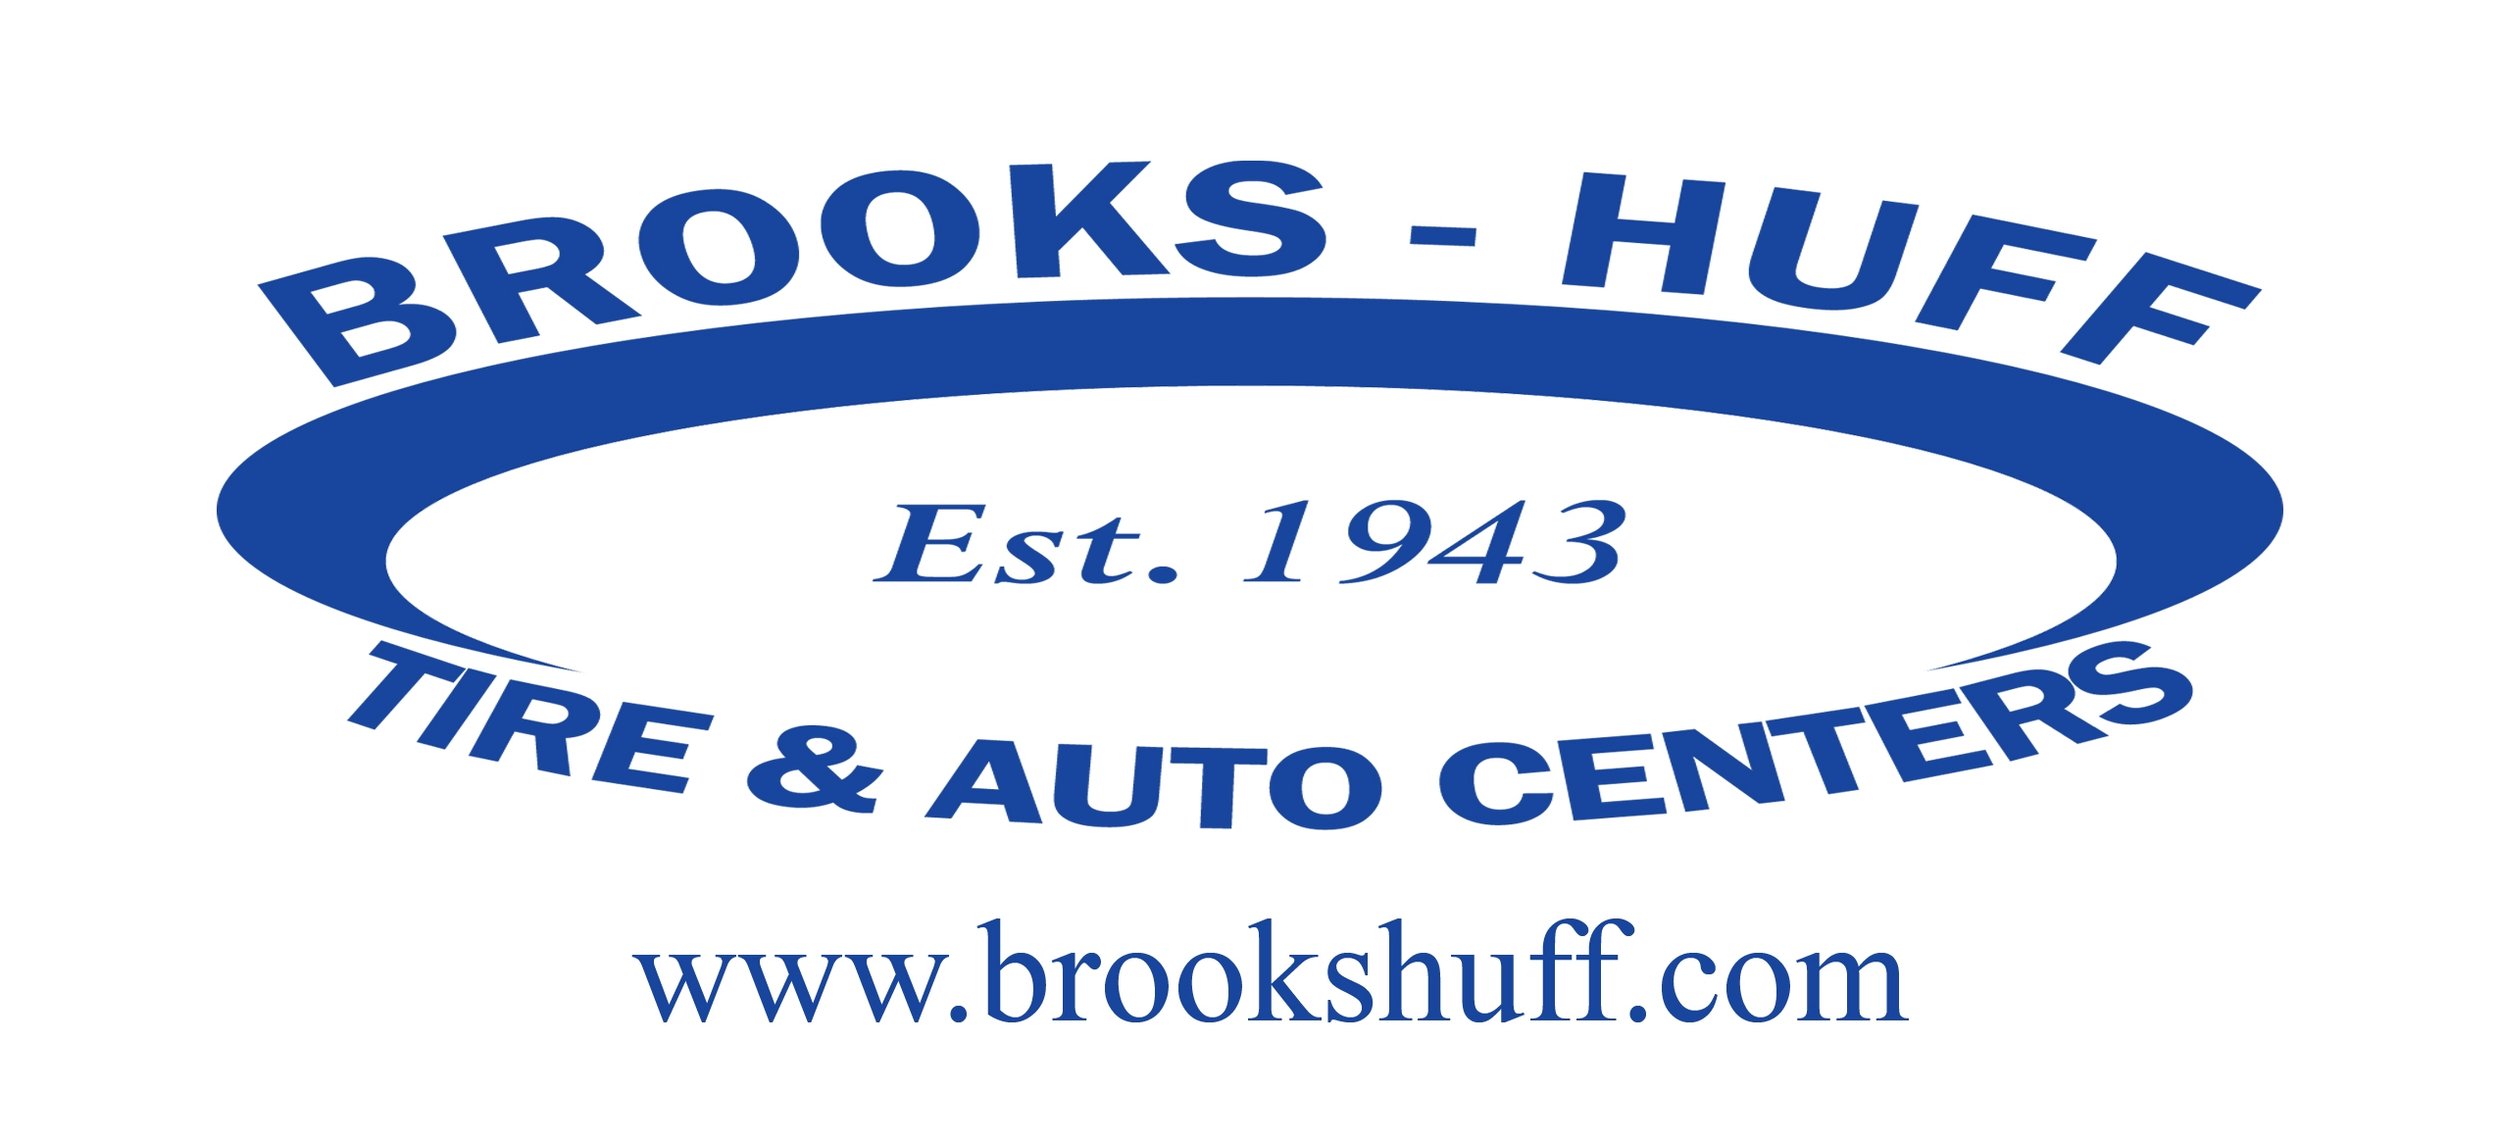 Brooks-Huff Logo with internet address.jpg